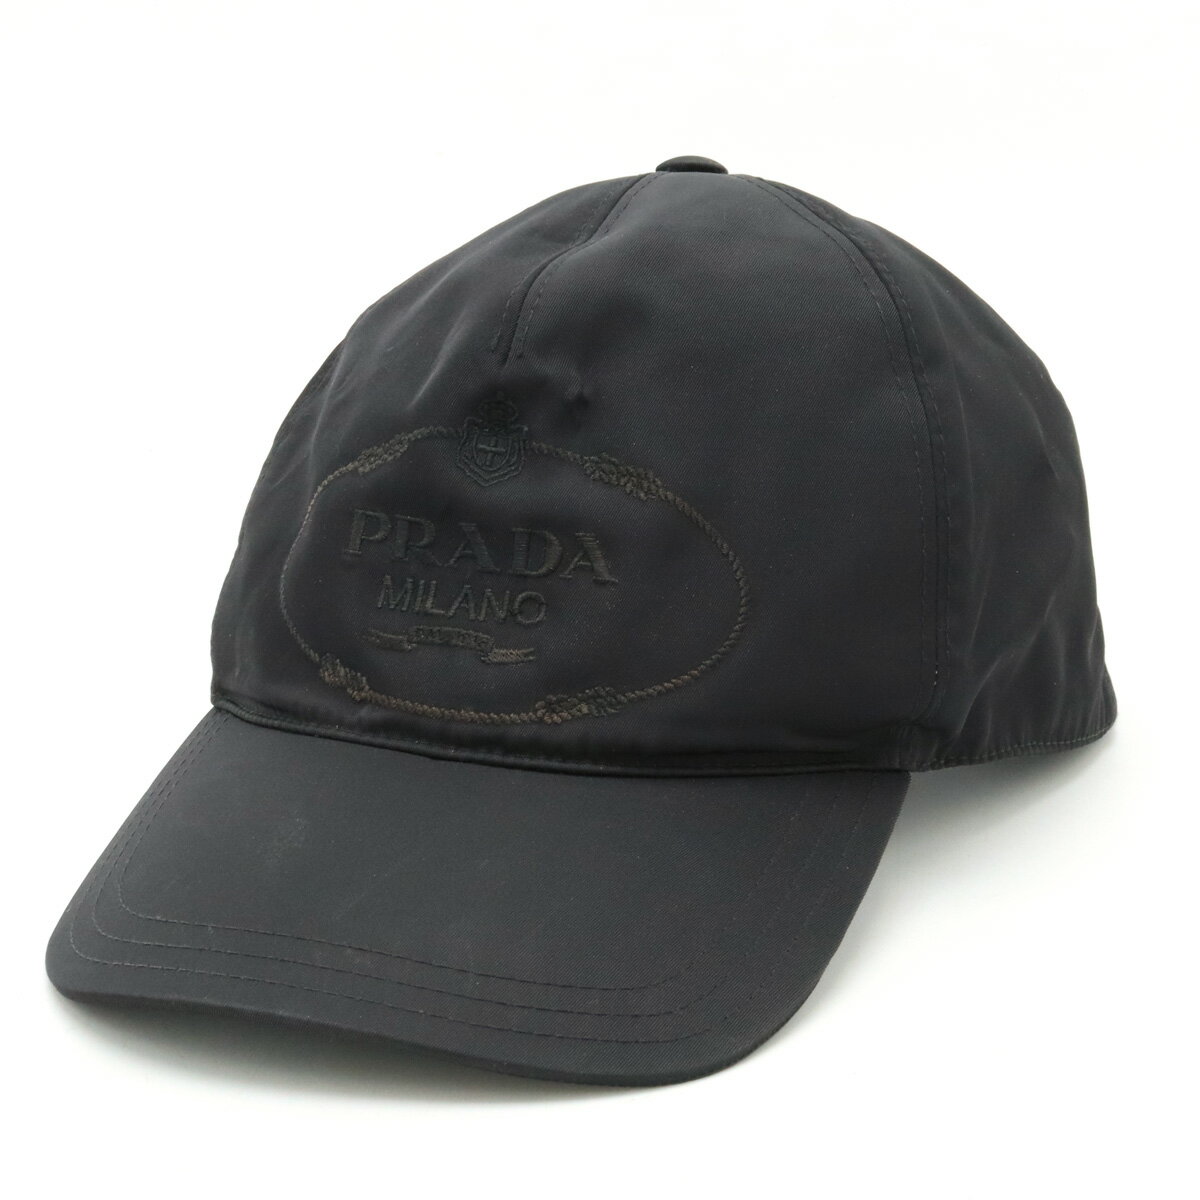 PRADA プラダ ロゴ刺繍 ベースボールキャップ 帽子 ナイロン ブラック 黒 Lサイズ 1HC179 2B15 